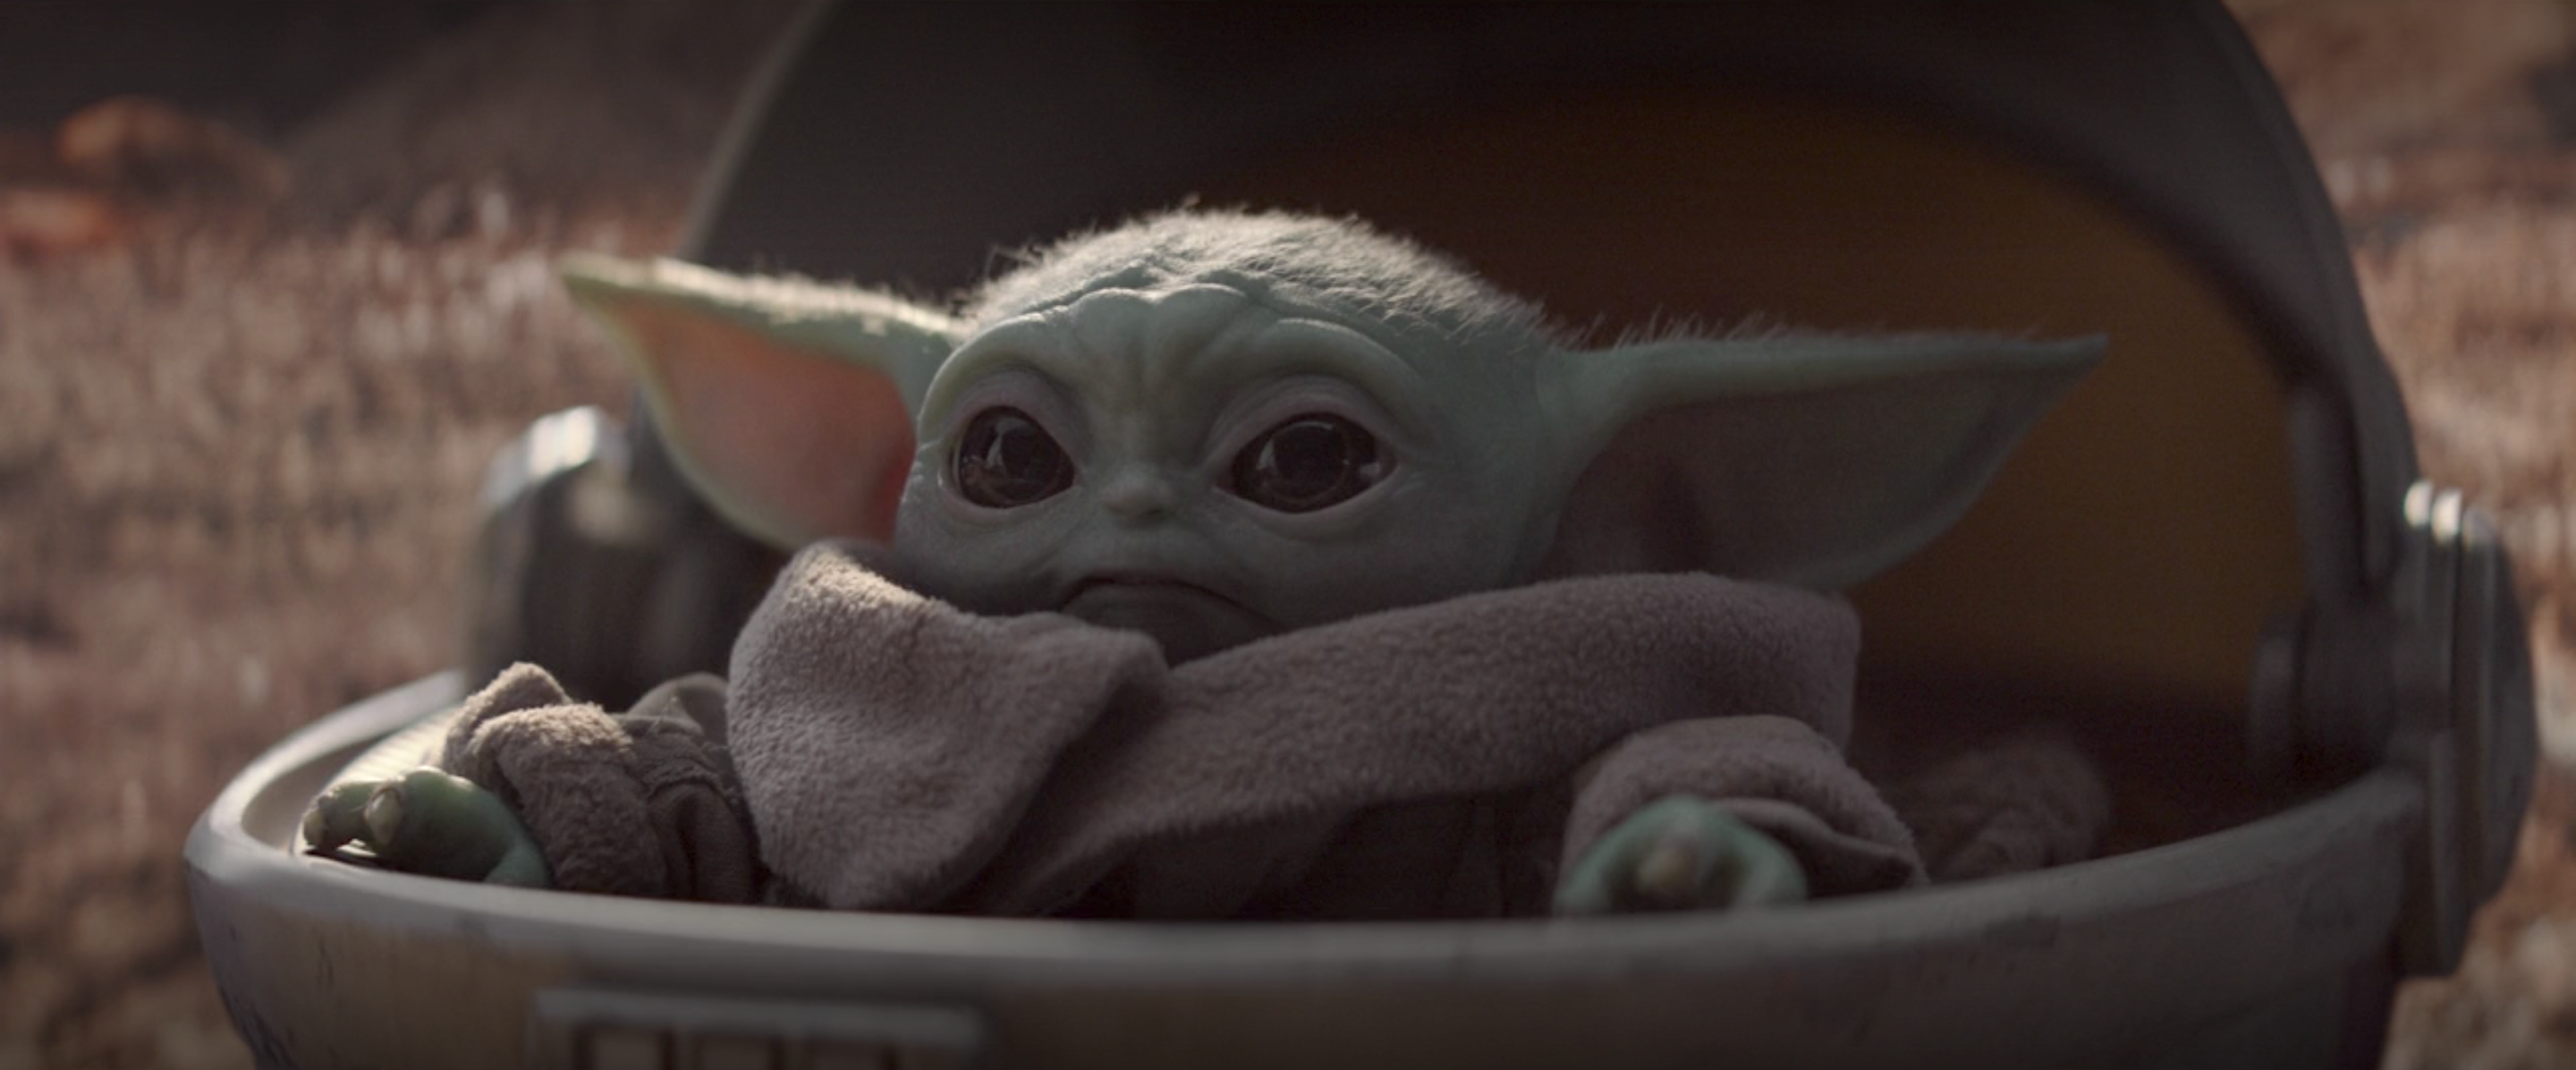 UK Star Wars Mandalorian Small Baby Yoda 4" Figure Toy The Force Awakens Model 